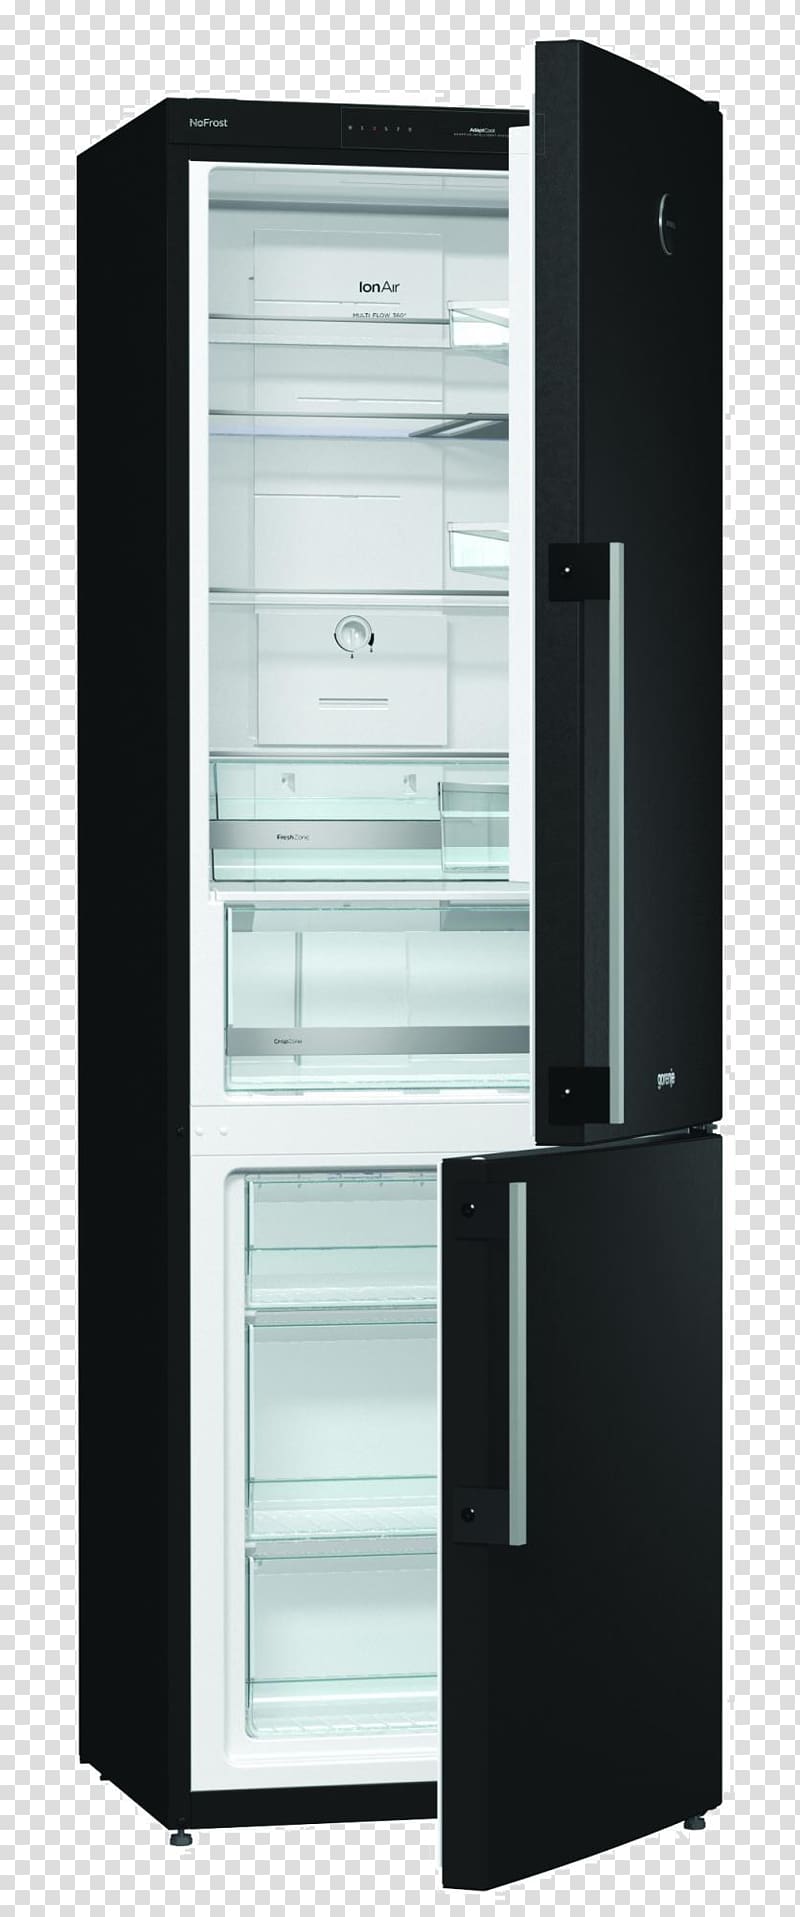 Refrigerator Freezers Gorenje Home appliance European Union energy label, refrigerator transparent background PNG clipart